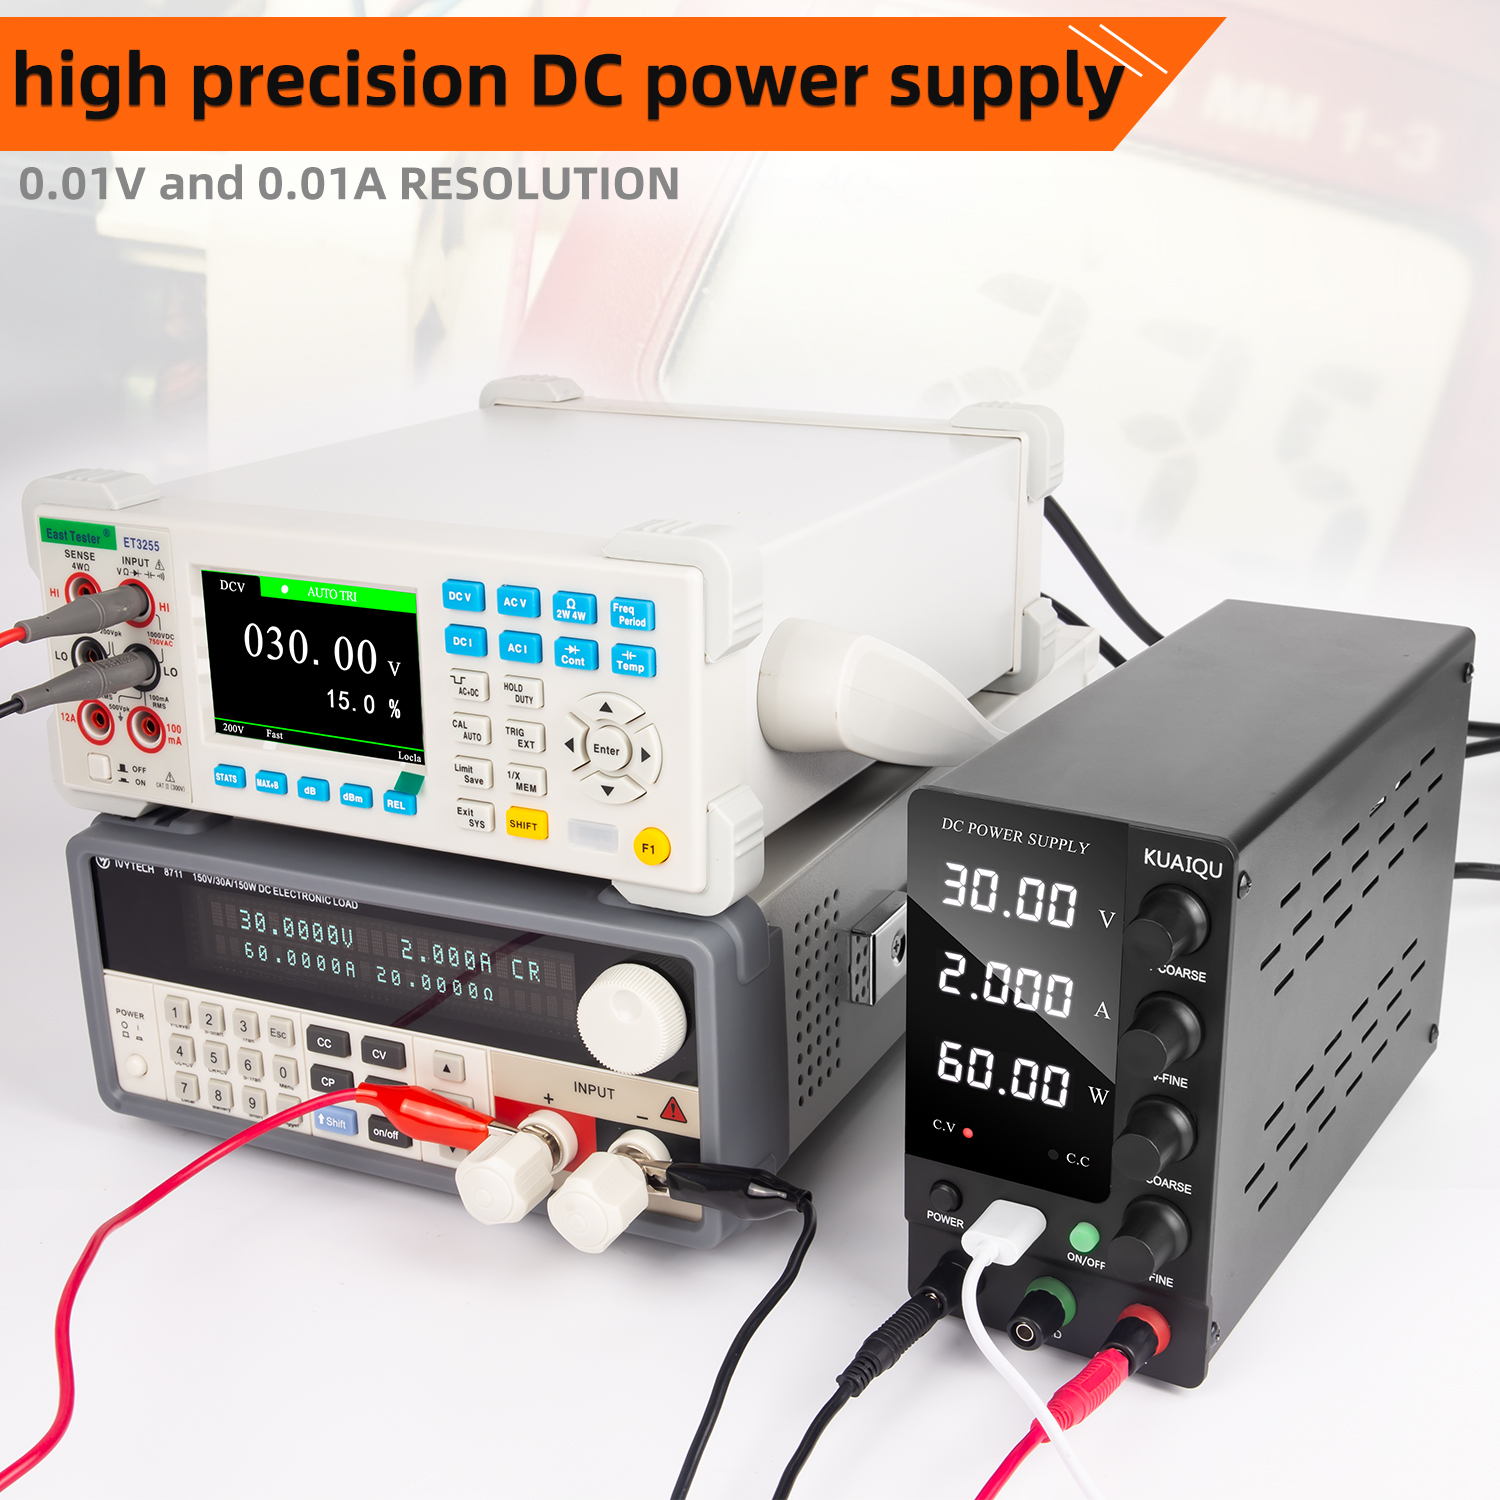 KUAIQU-SPS-C3010-USB-Adjustable-DC-Power-Supply-30V-10A-Laboratory-Lab-Bench-Source-Digital-Voltage--1871078-9